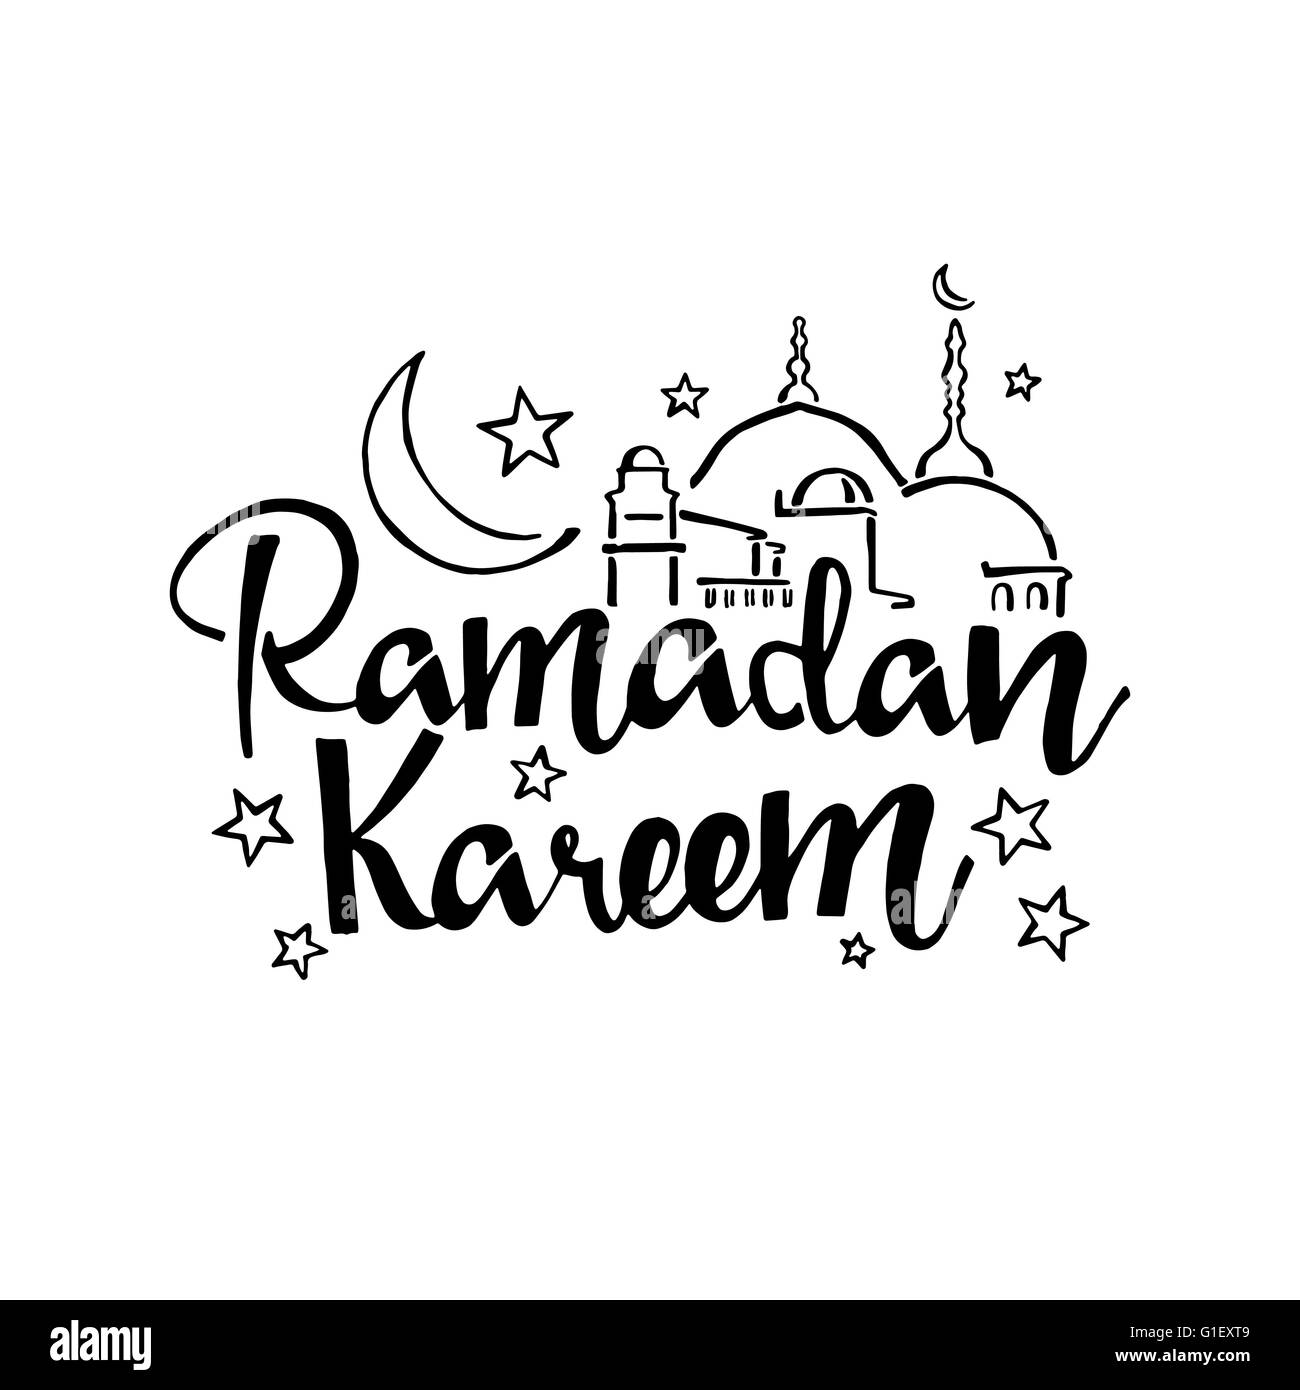 Ramadan kareem Black and White Stock Photos & Images - Alamy